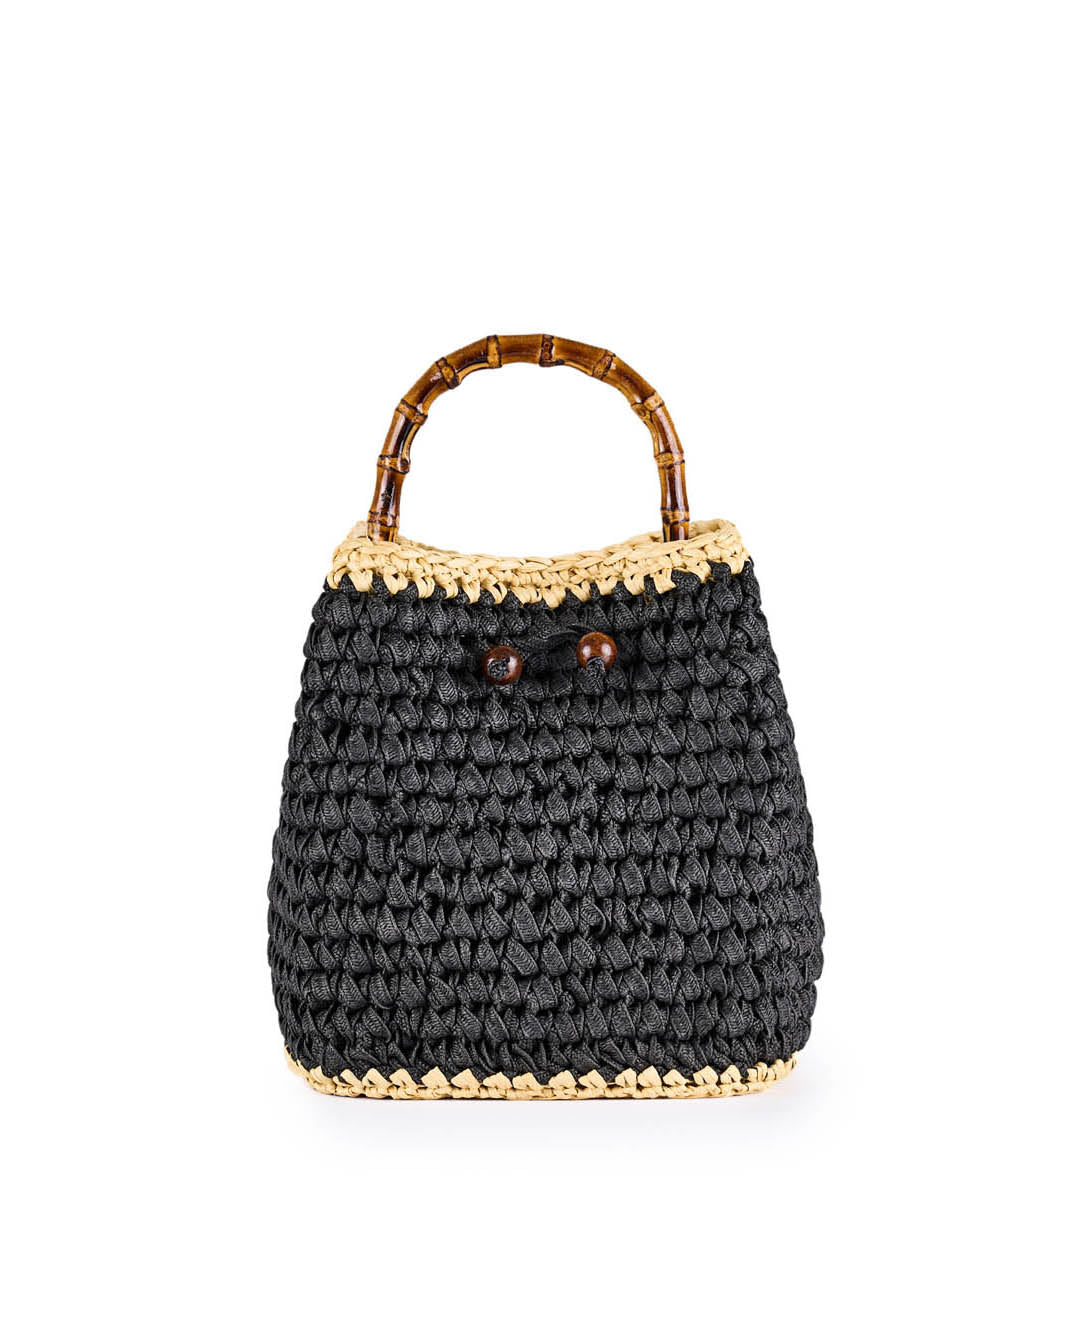 Handwoven black and beige raffia handbag with bamboo handle